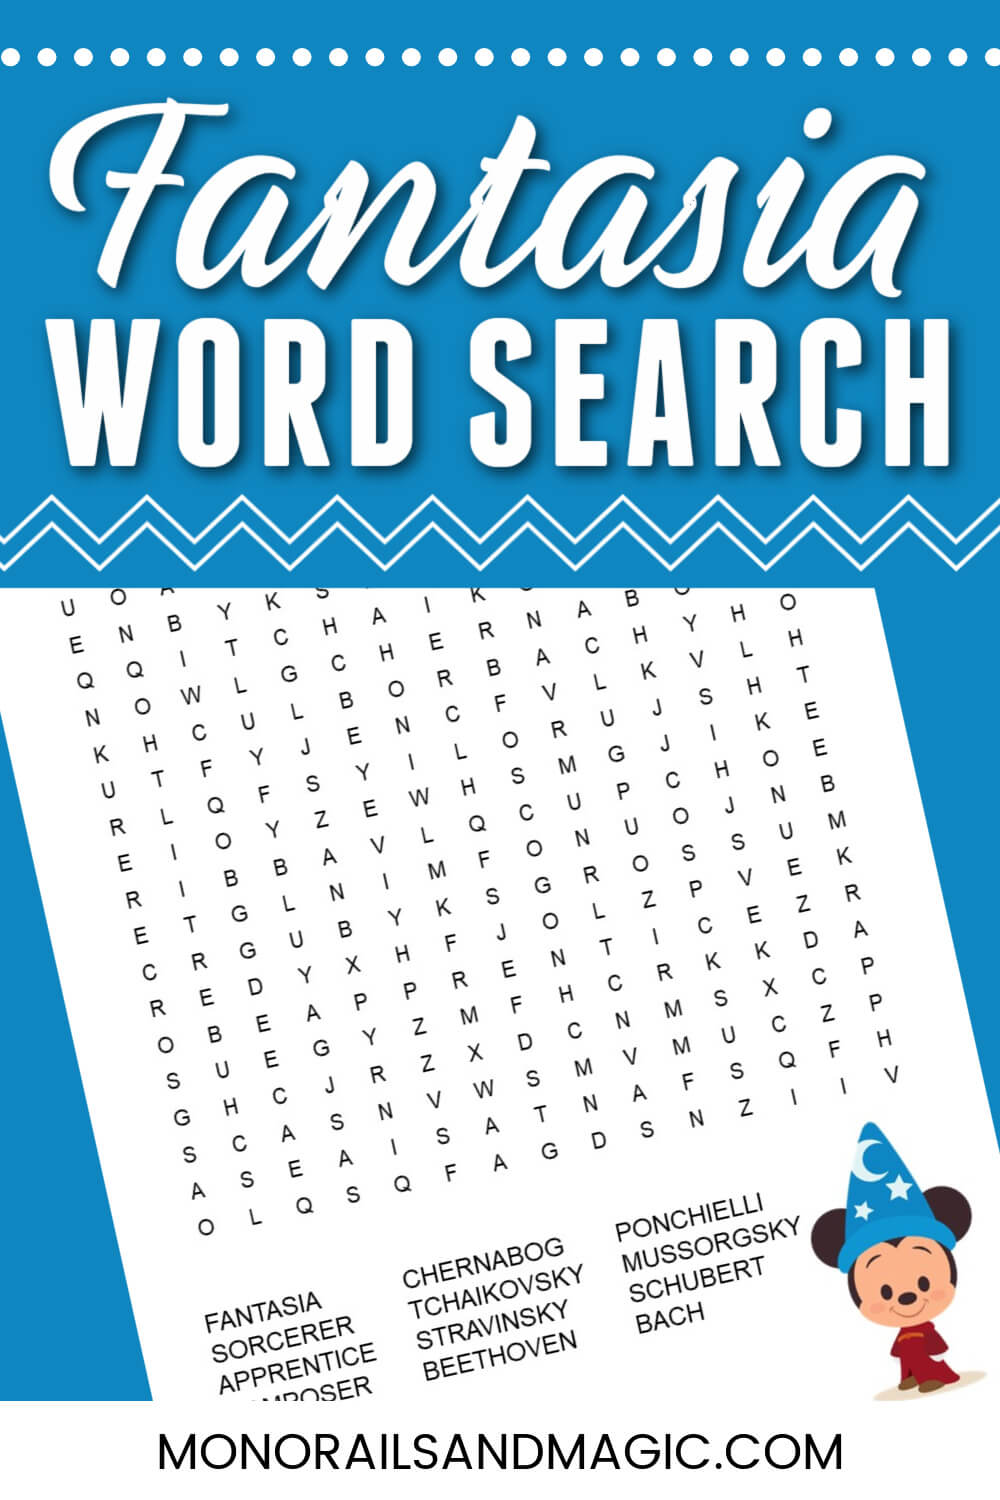 Free printable Fantasia word search for kids.